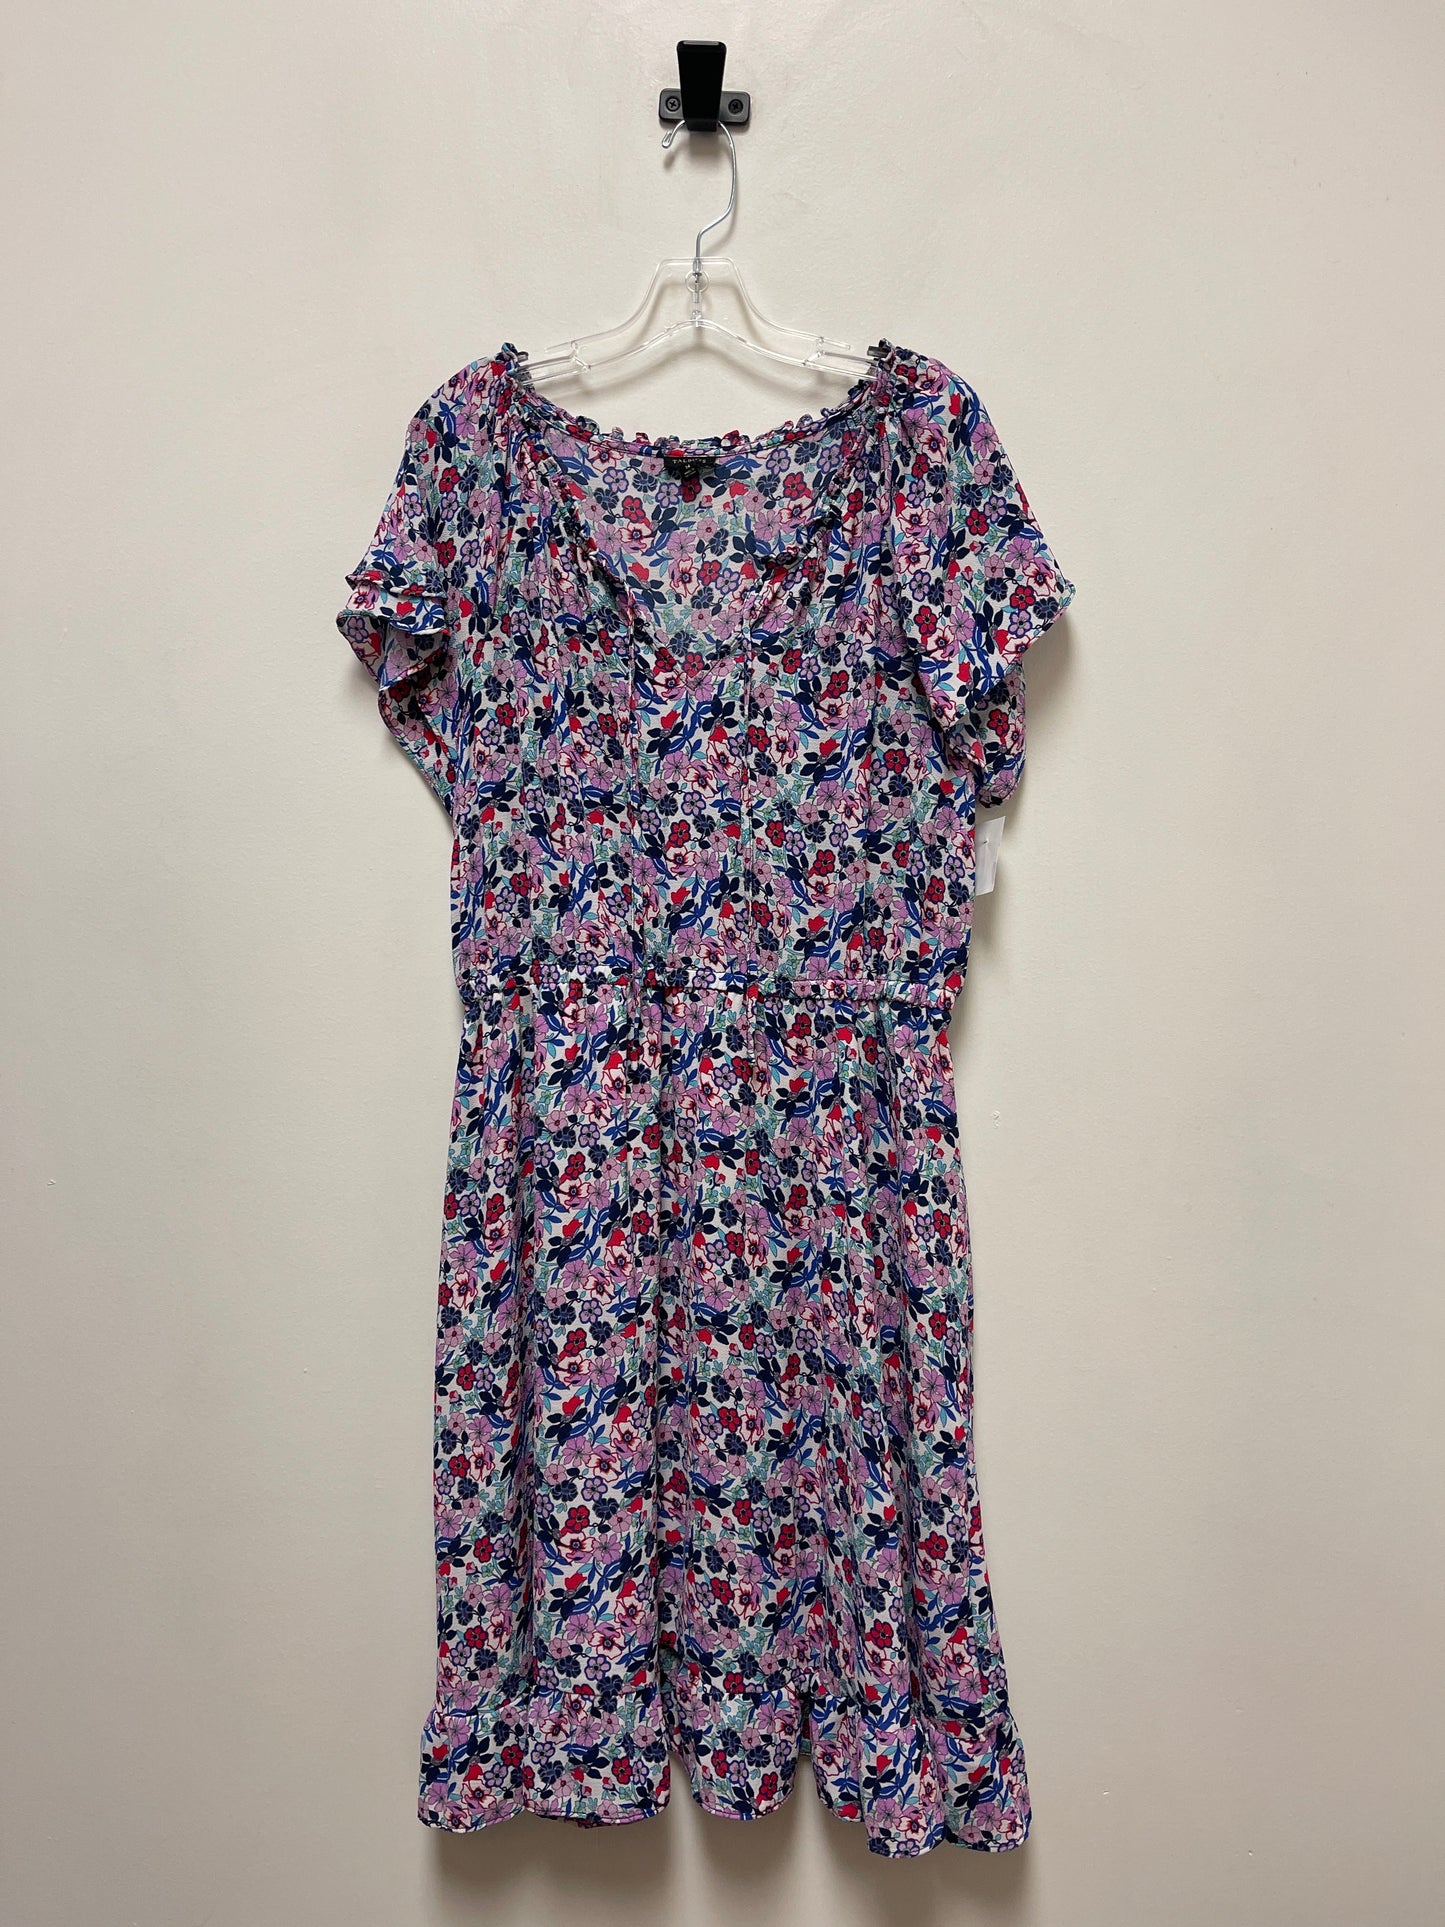 Floral Print Dress Casual Short Talbots, Size Xl